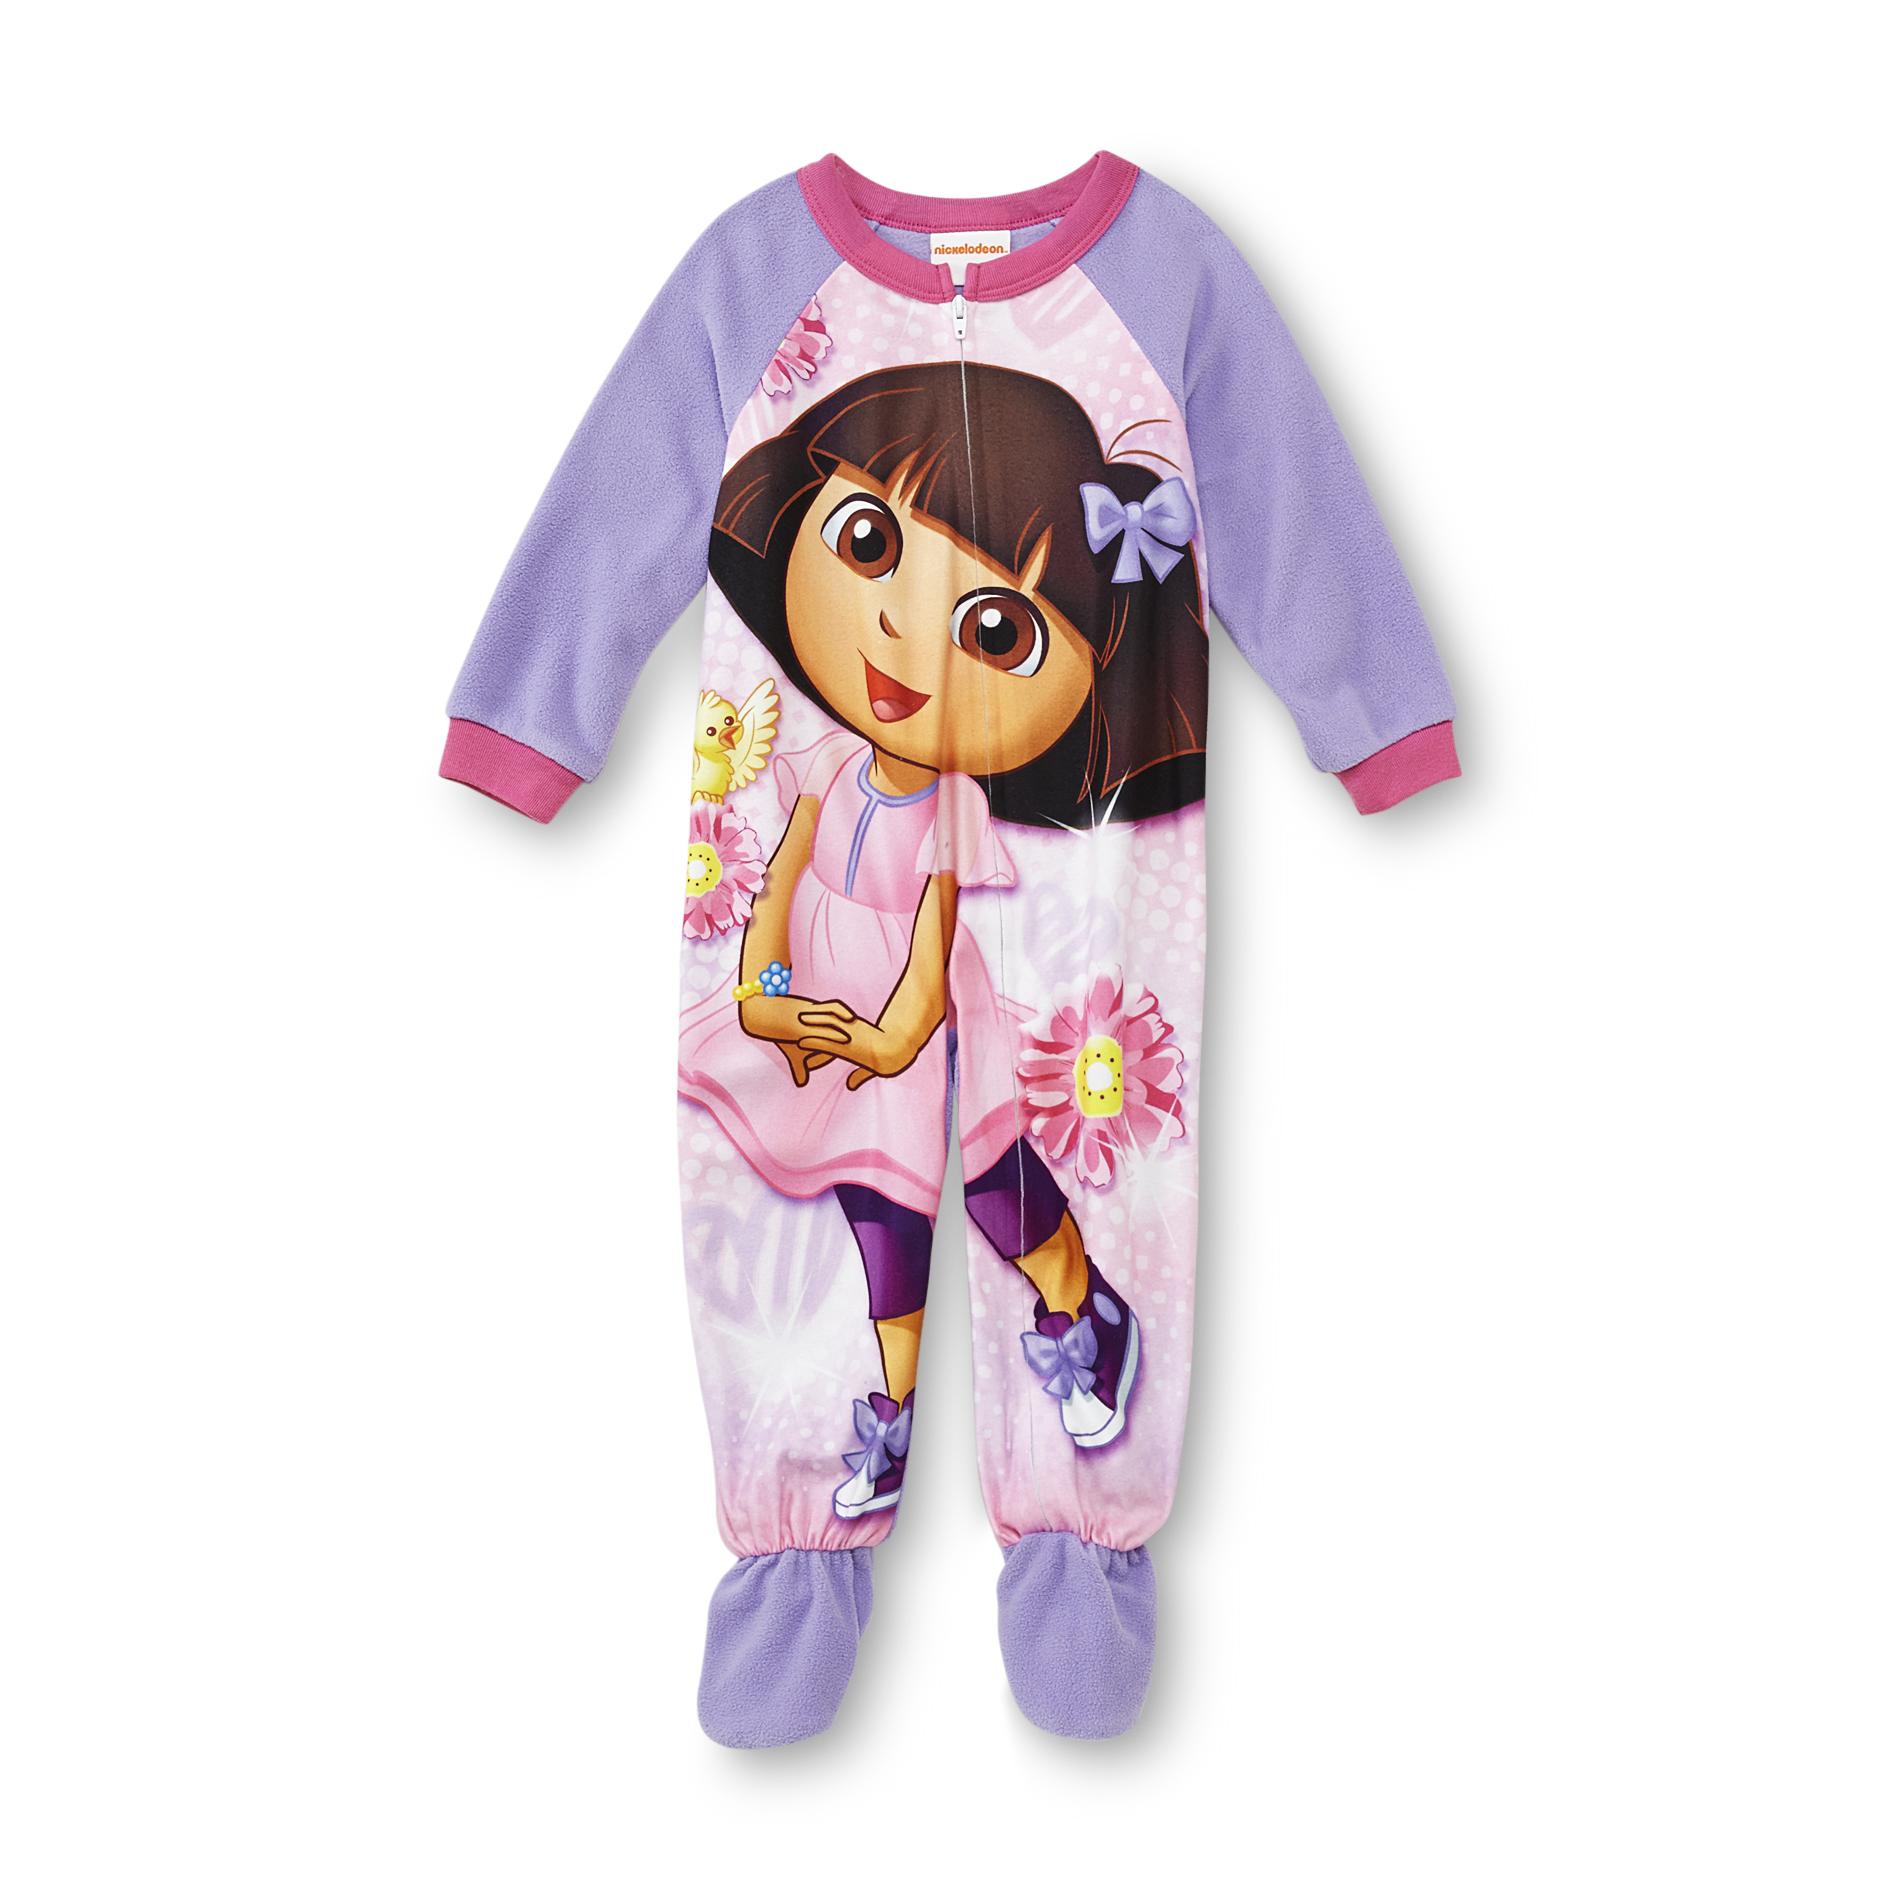 Nickelodeon Infant & Toddler Girl's Footed Pajamas - Dora The Explorer